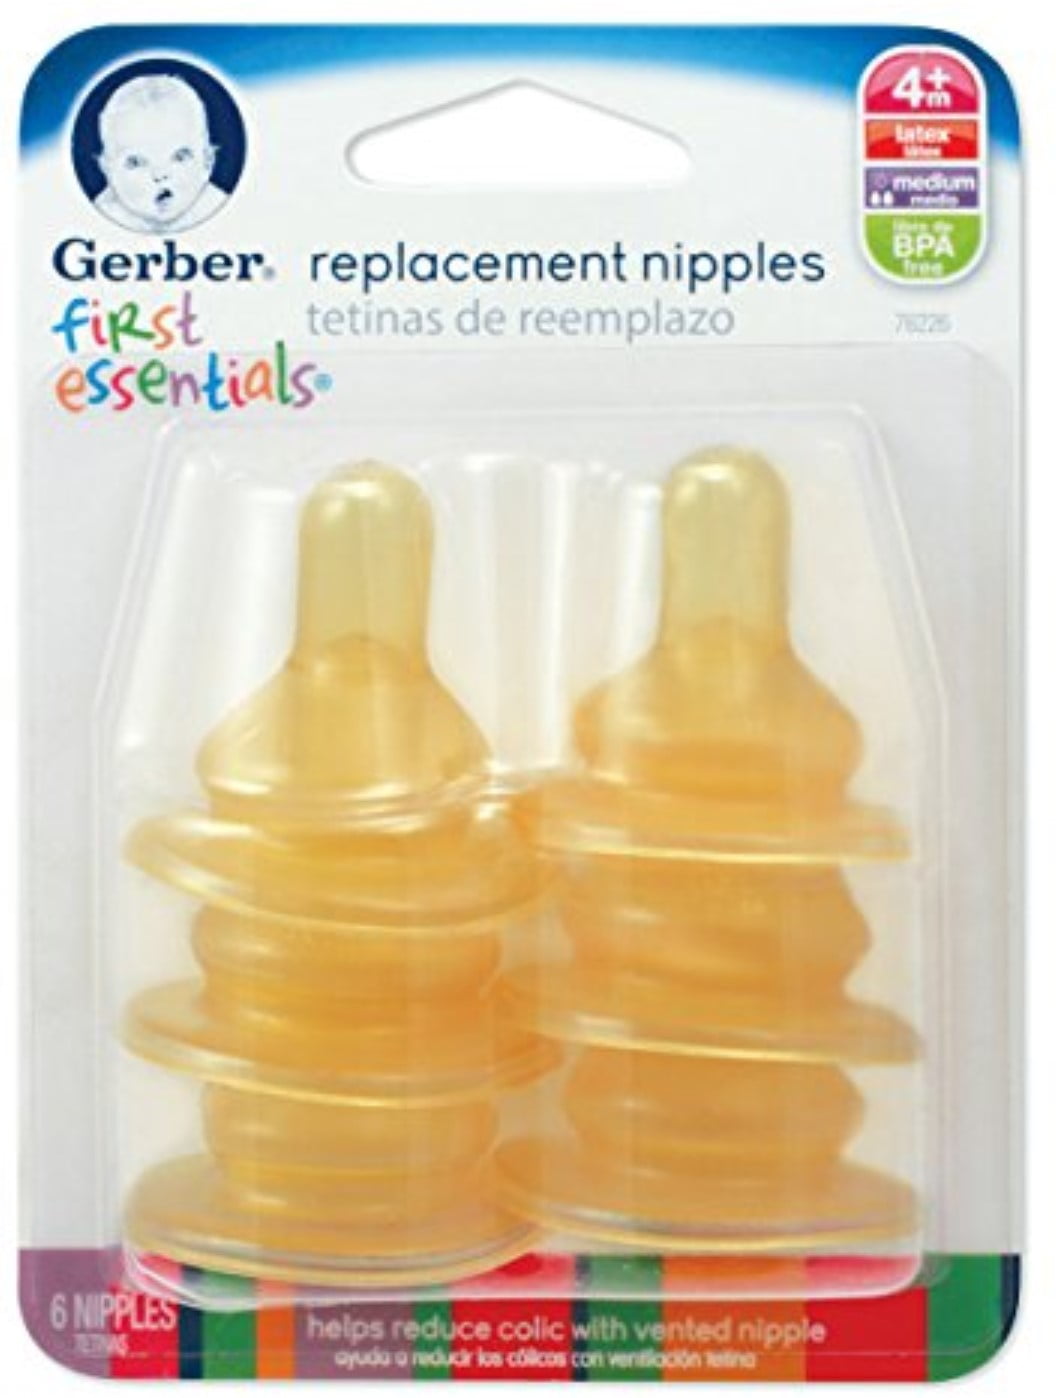 Gerber First Essentials Replacement Nipples 